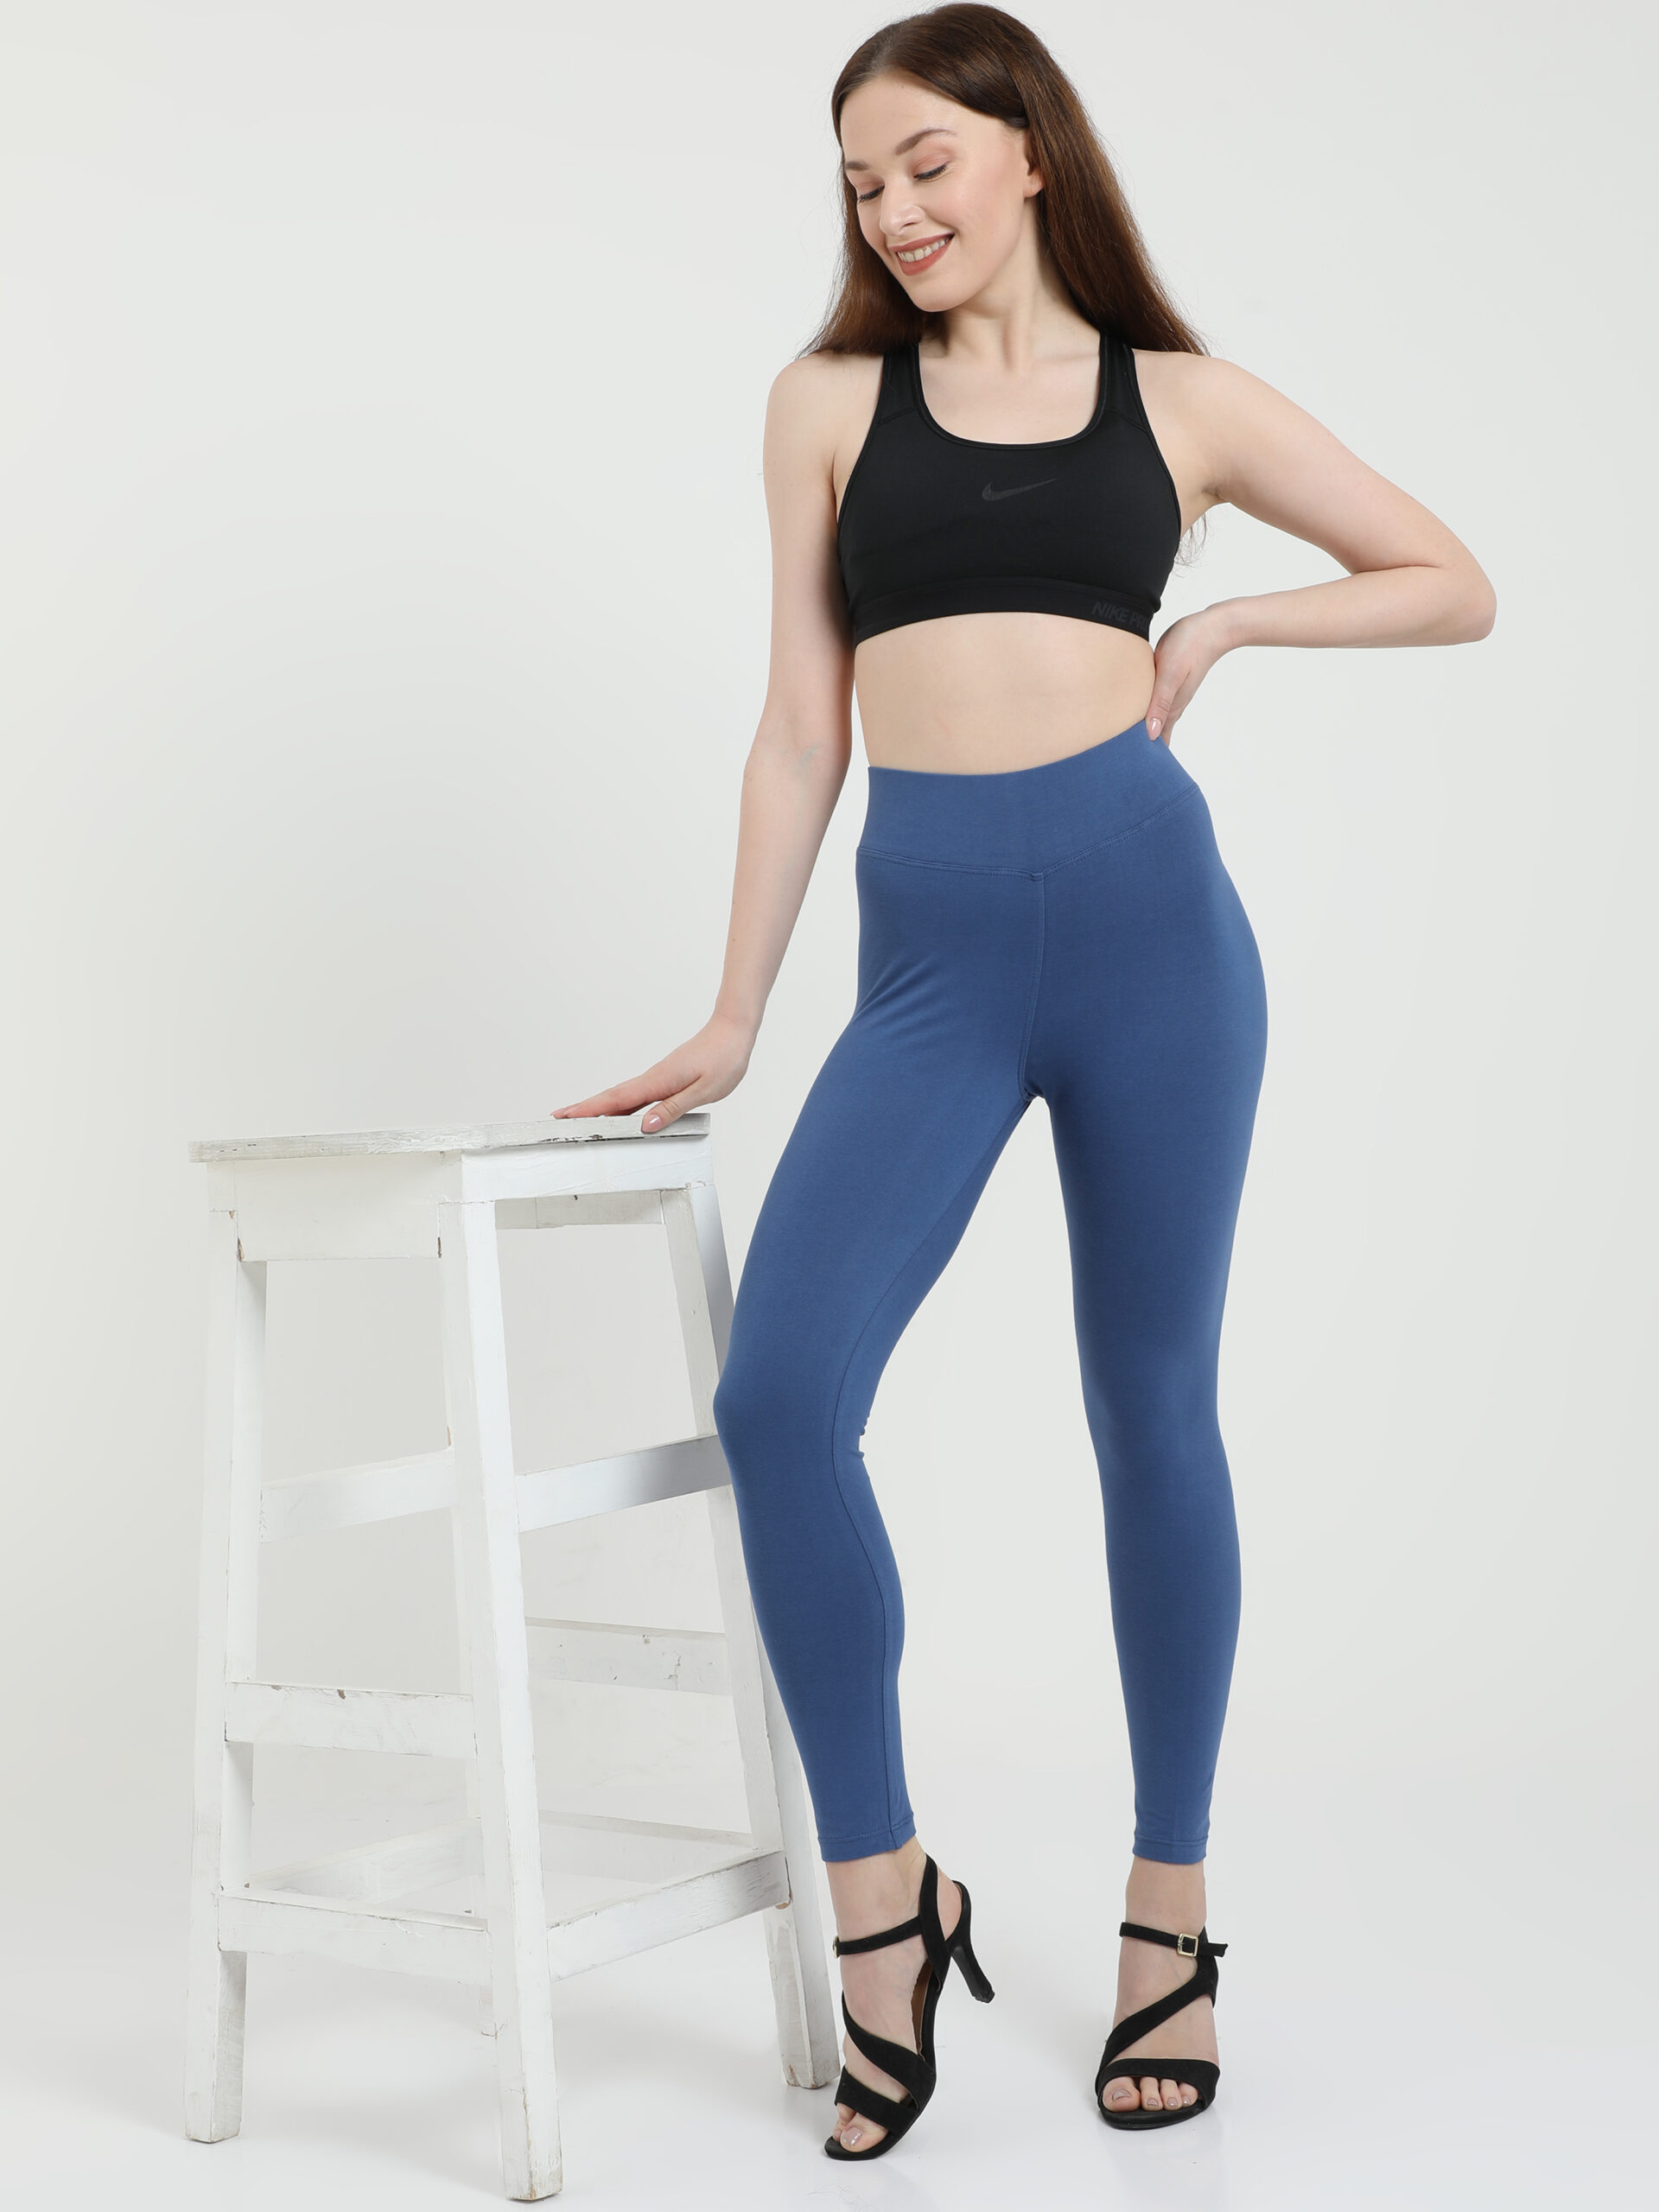 Indigo leggings for women Compression pant high waist - Belore Slims